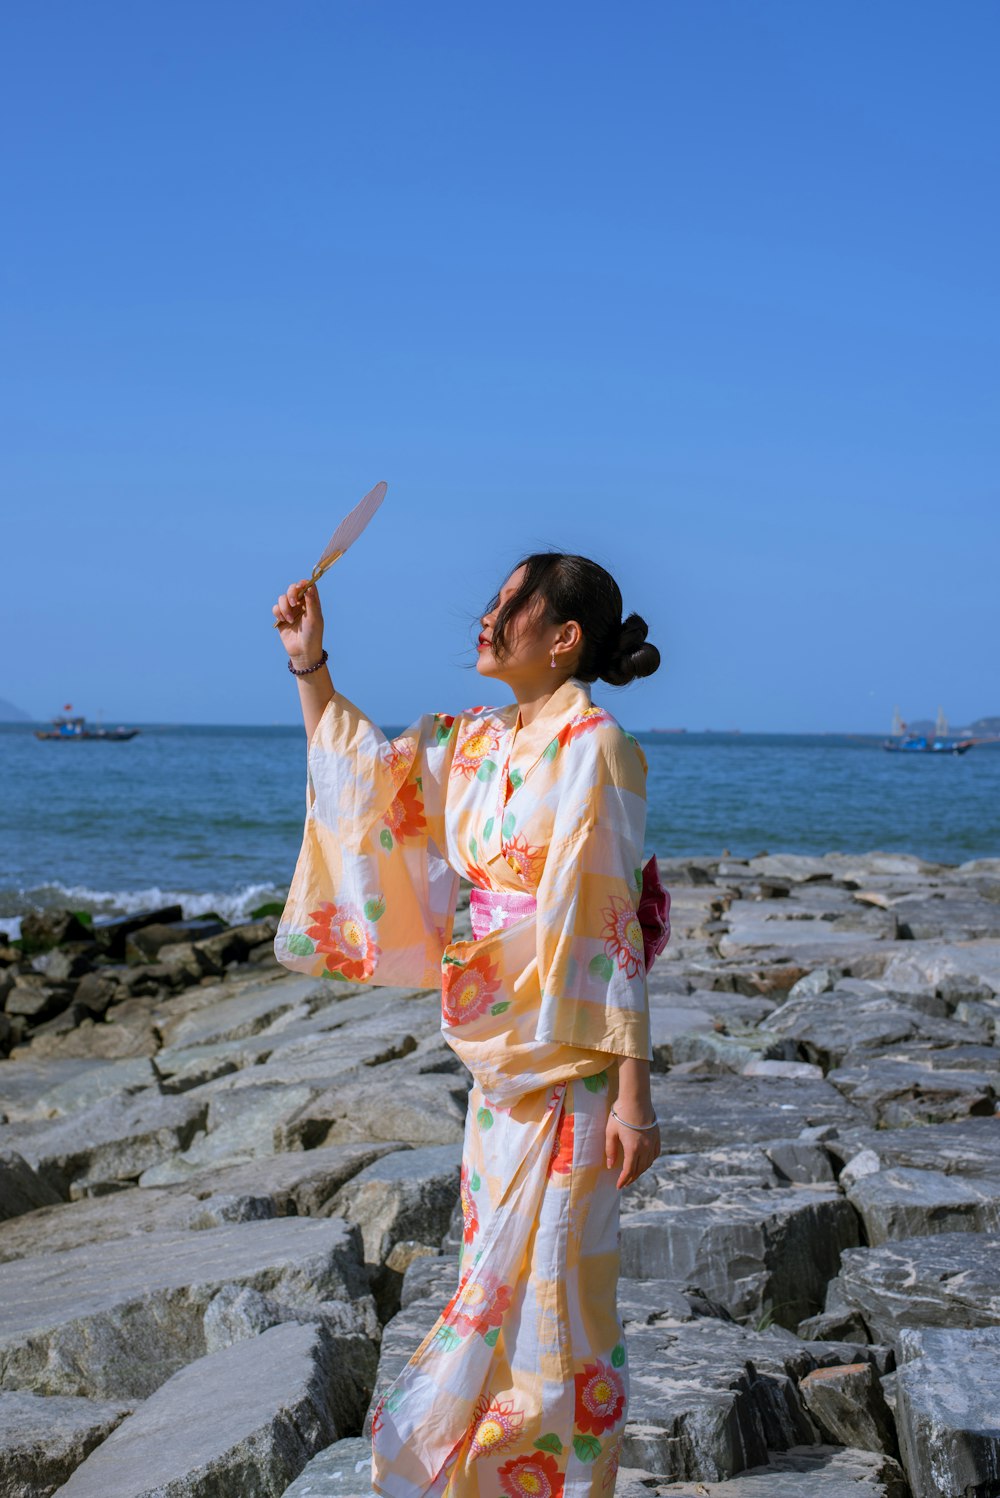 a woman in a kimono standing on a rocky beach